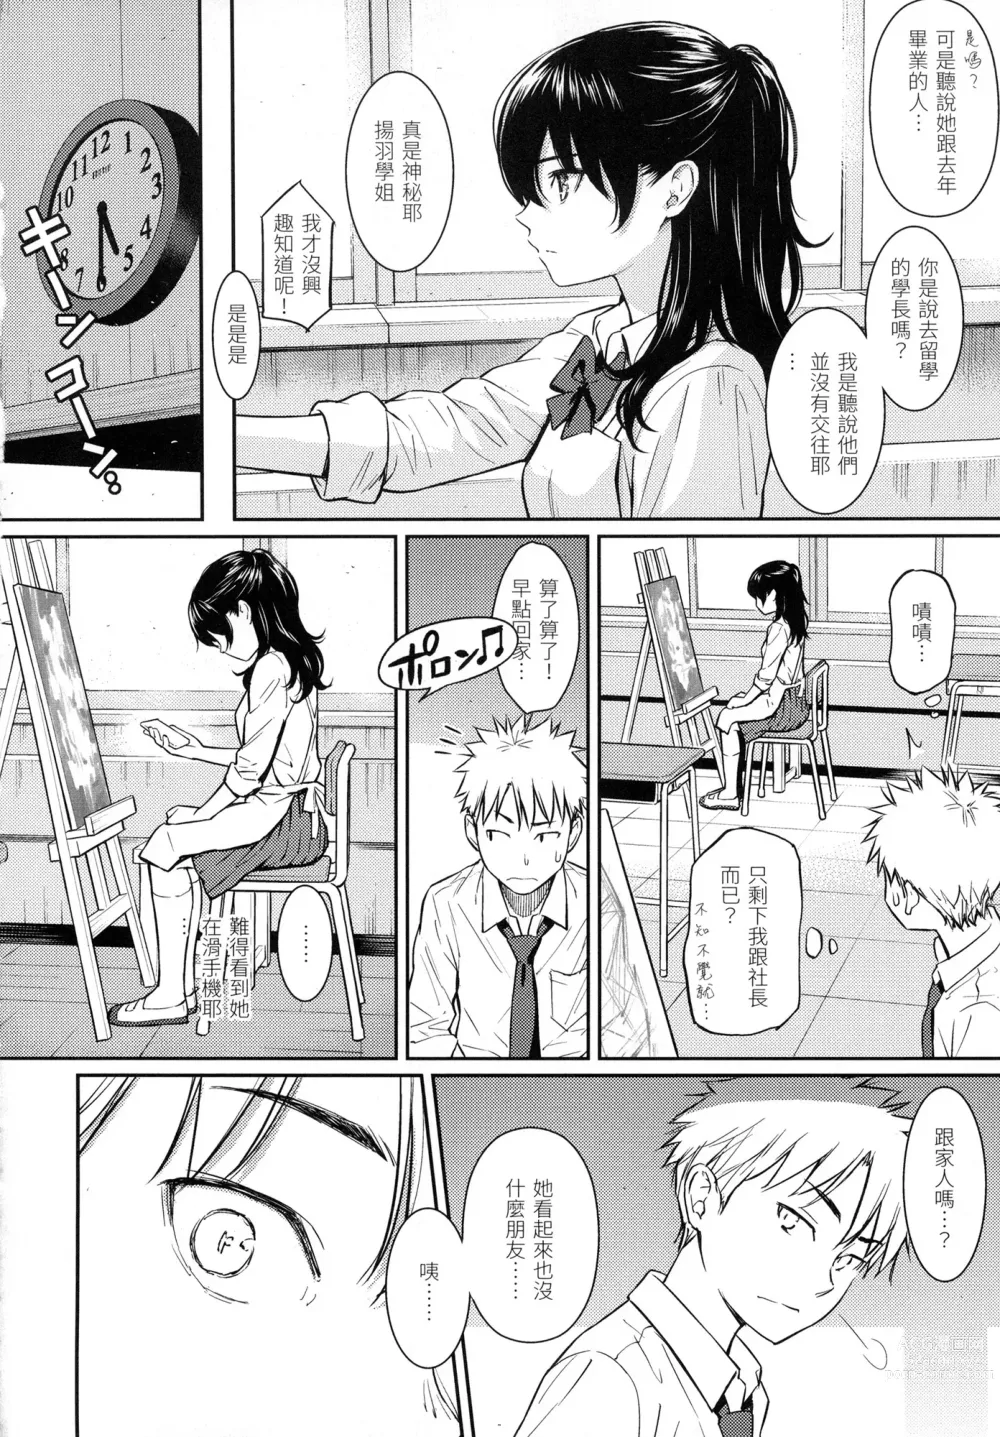 Page 211 of manga 求愛異鄉人 (decensored)